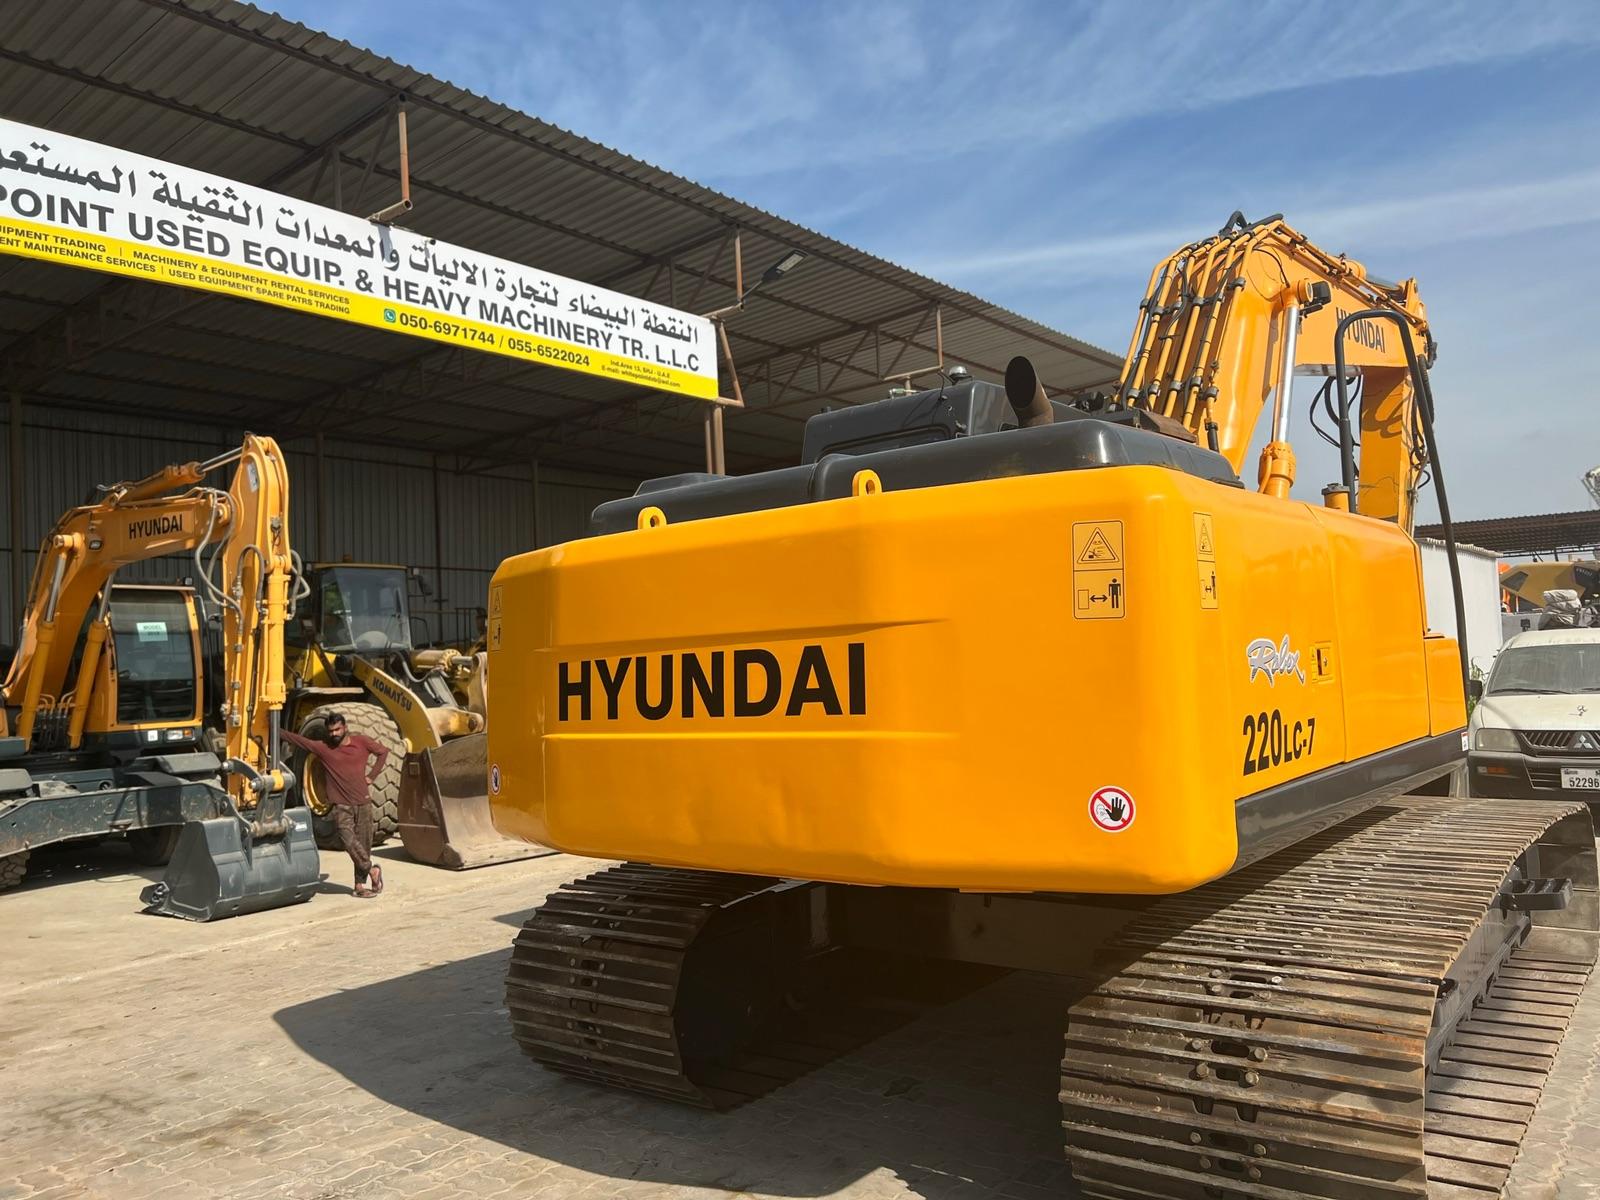 ad hyundai 220 lc 7 wide chain crawler excavator for sale